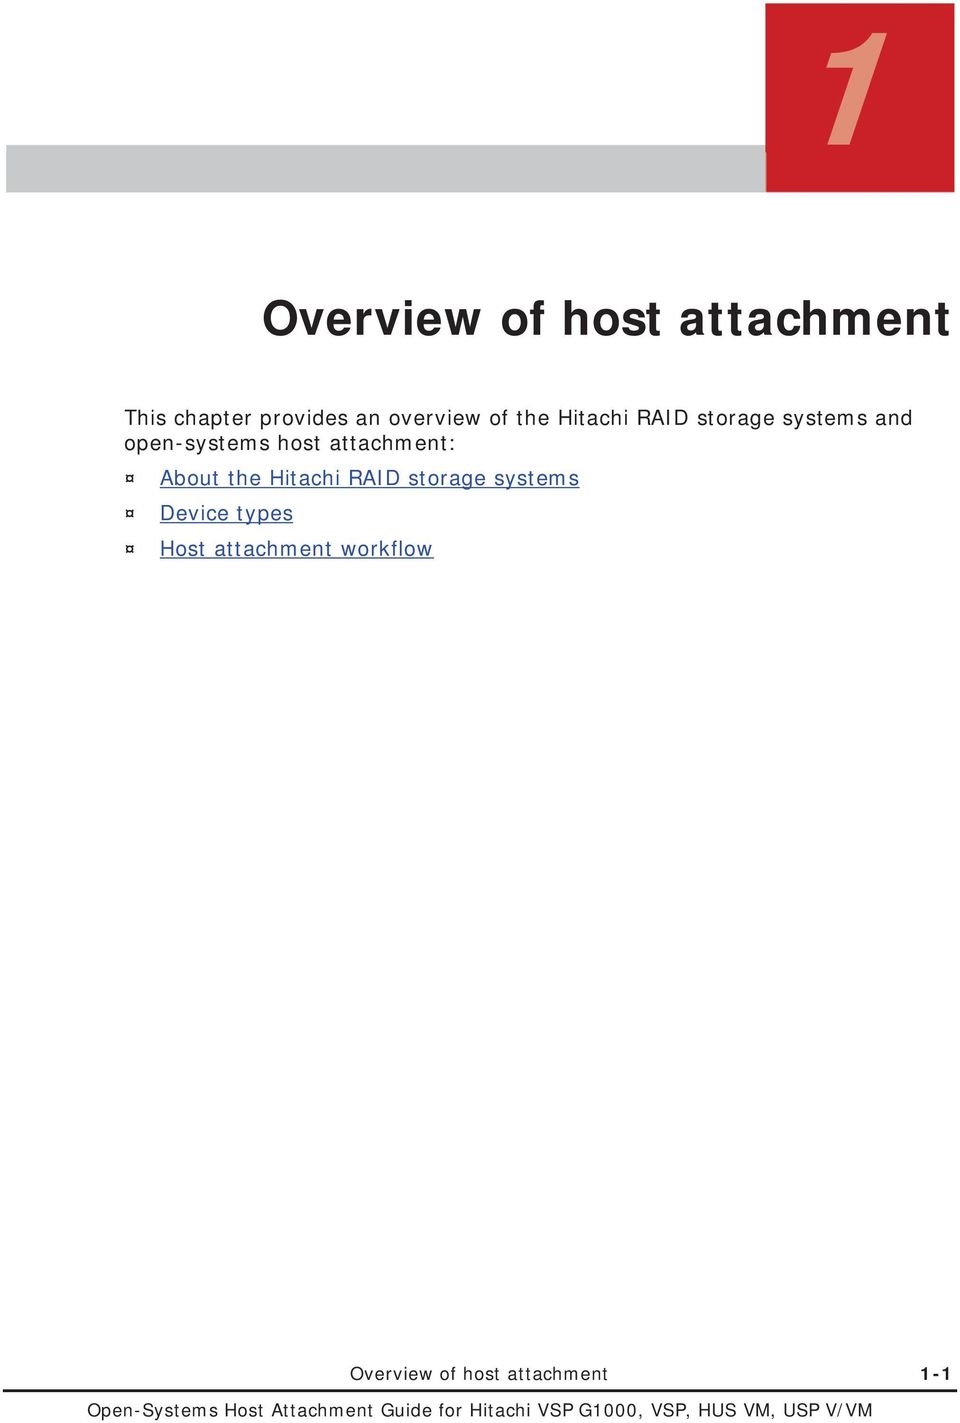 open-systems host attachment: About the Hitachi RAID storage